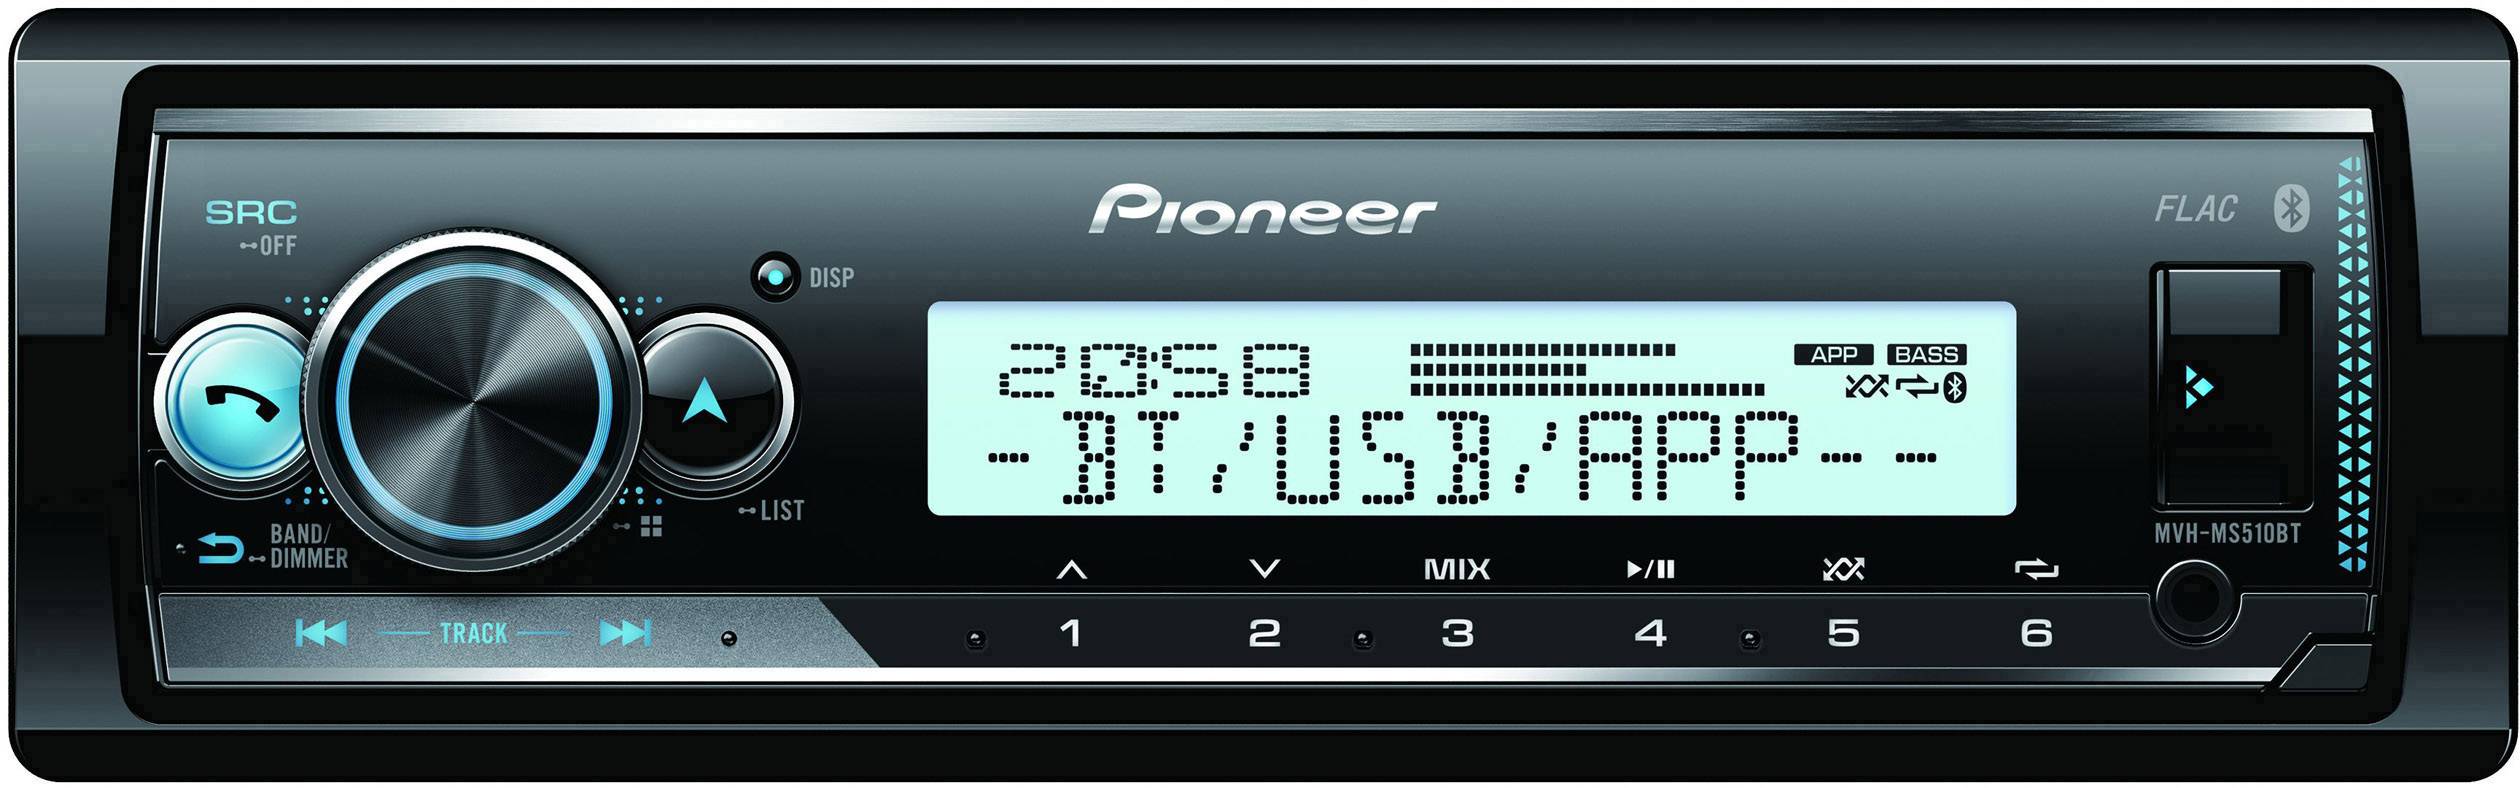 Pioneer deh-s110ub 1din Radio CD USB AUX IN Set pour Renault Laguna II 2005-2007 